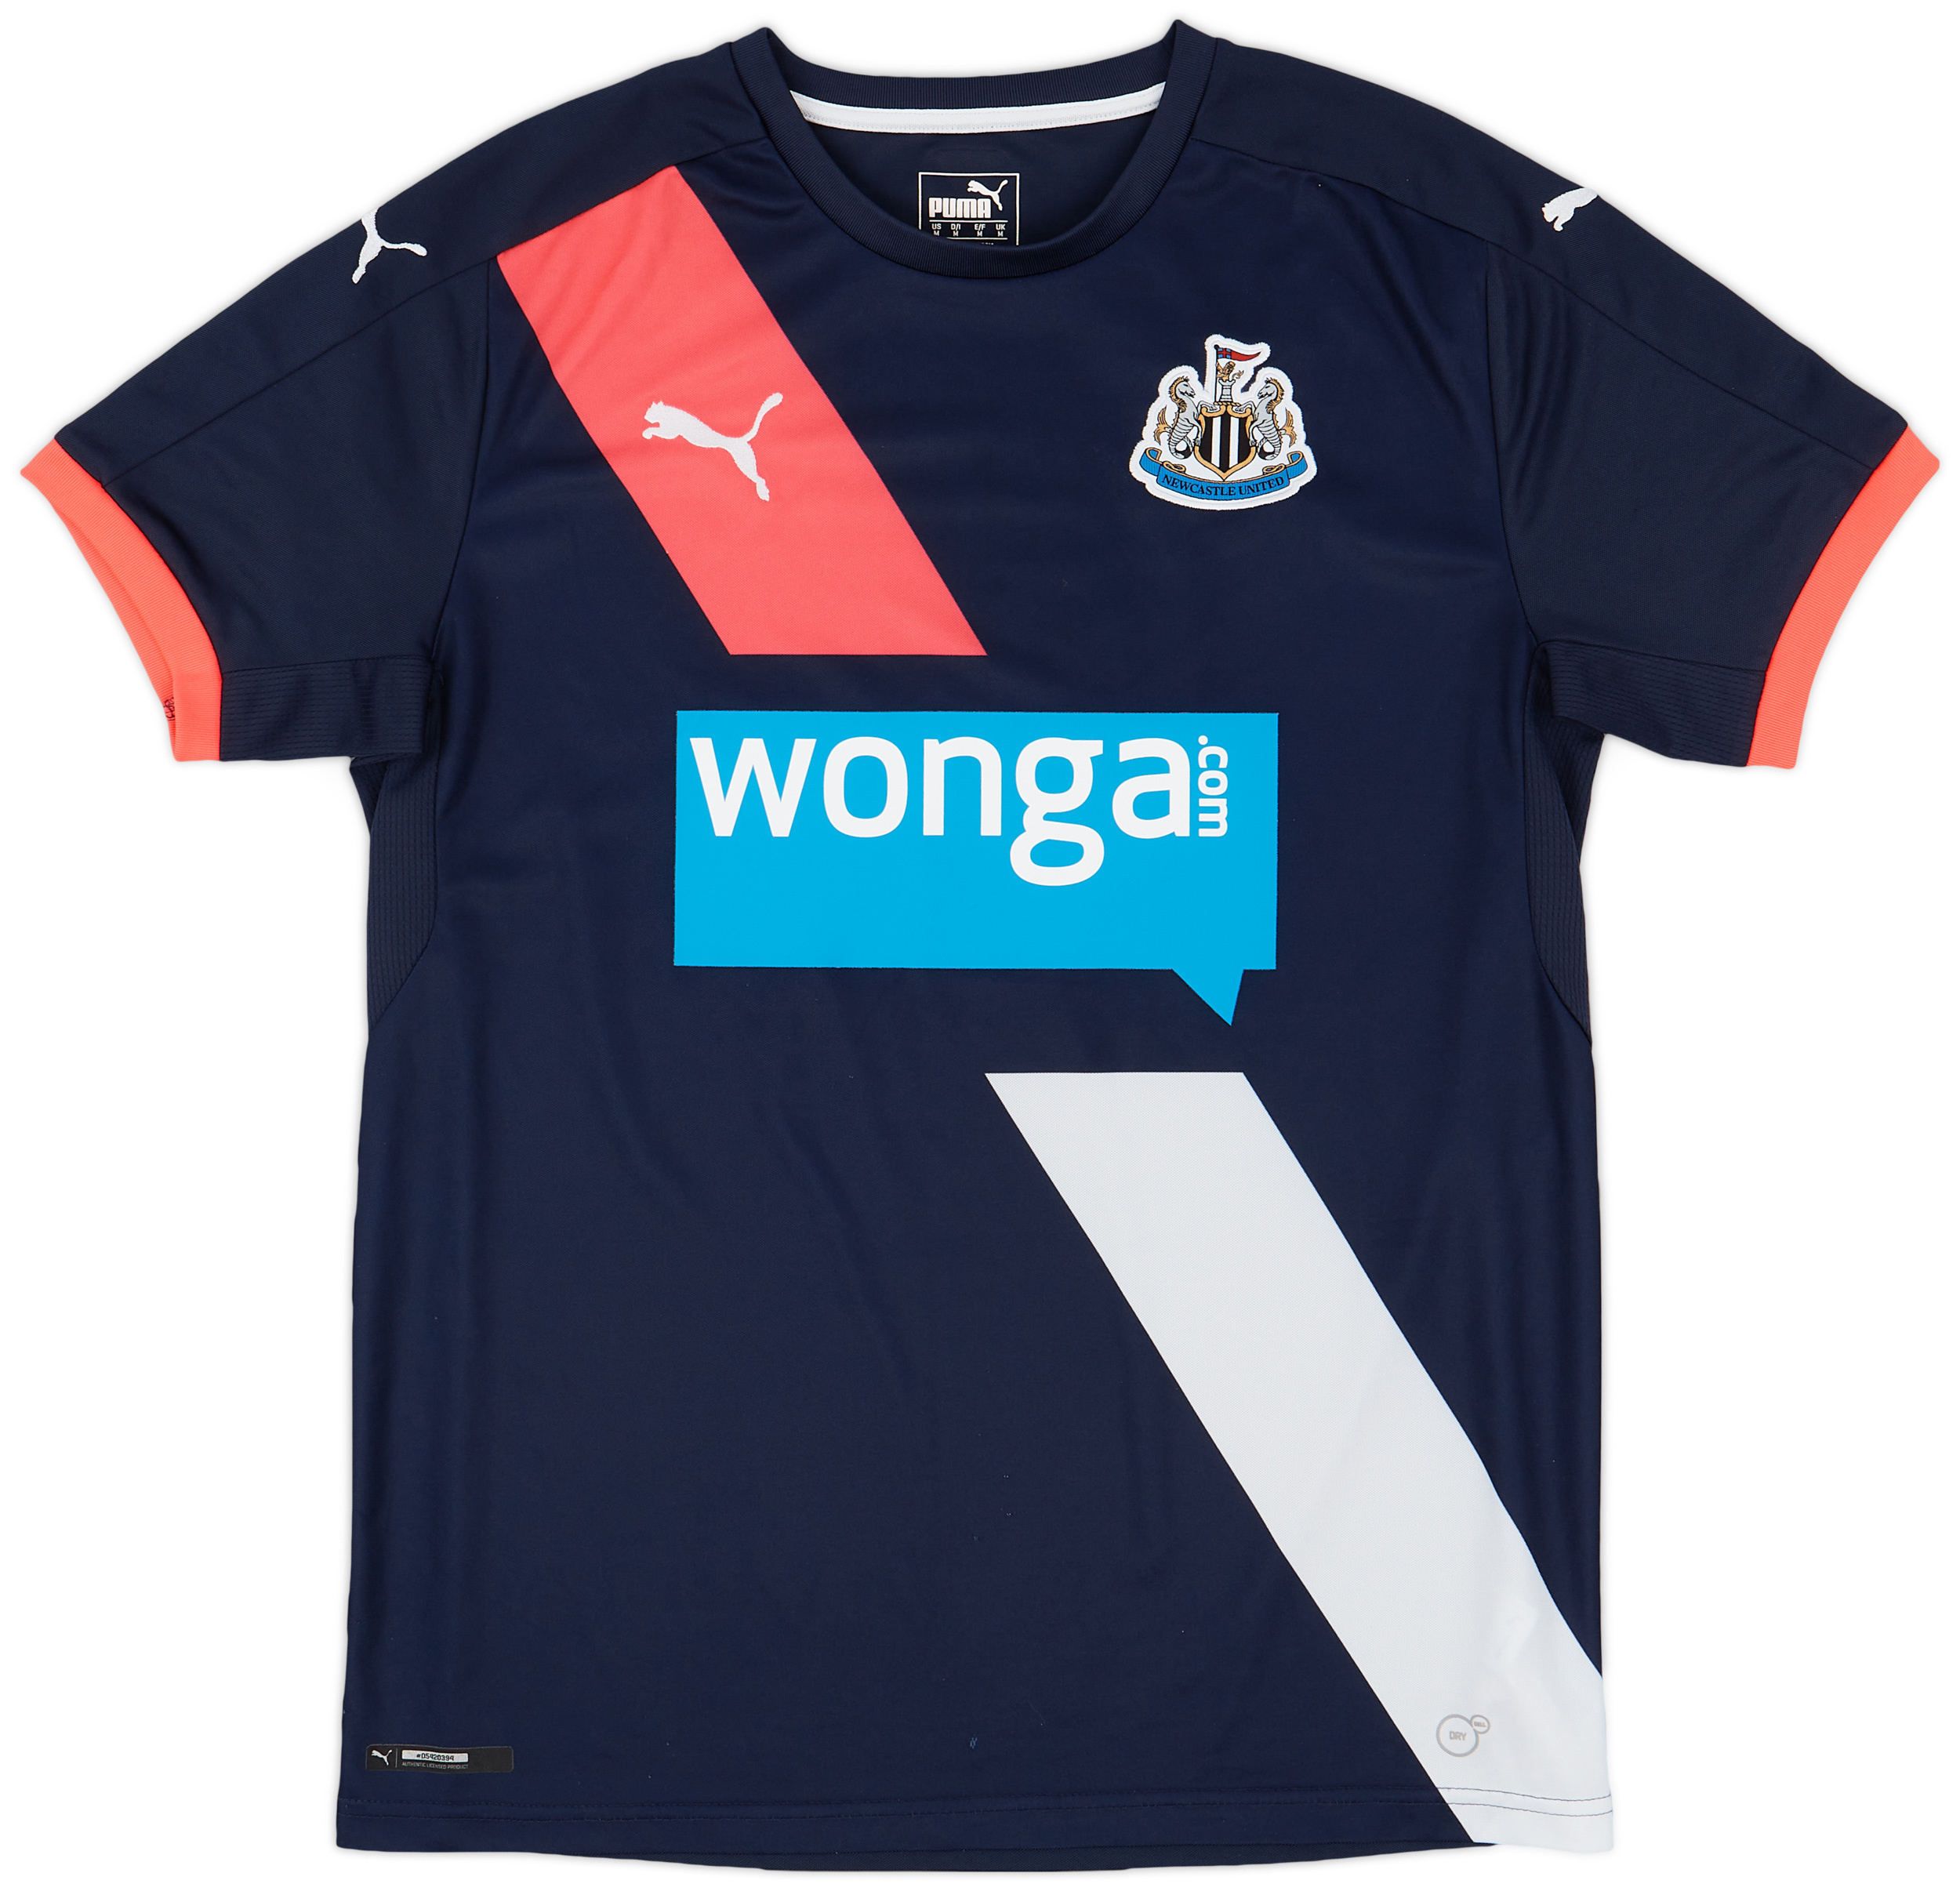 2015-16 Newcastle United Third Shirt - 9/10 - ()